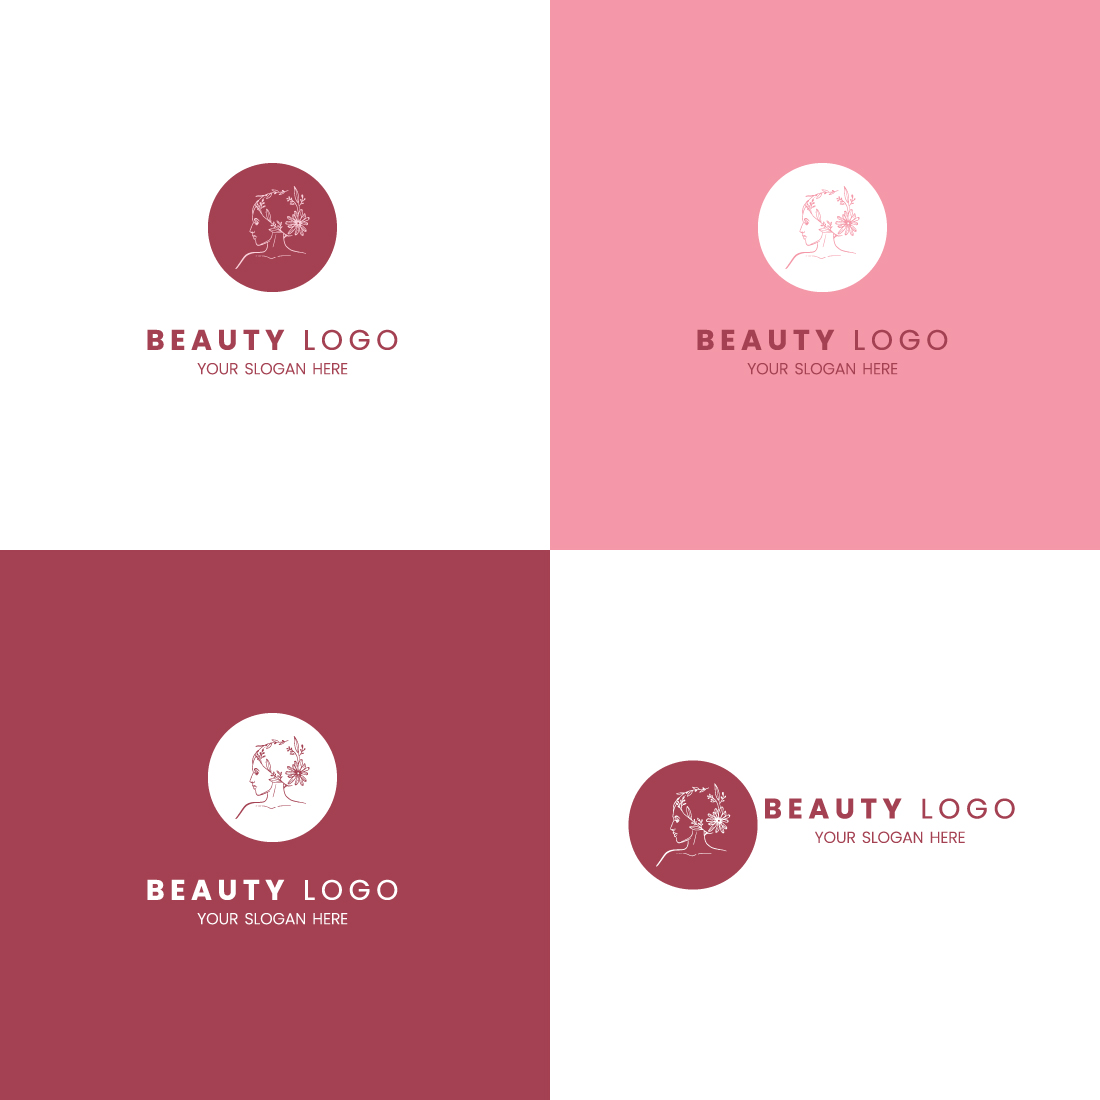 Beauty Logo cover